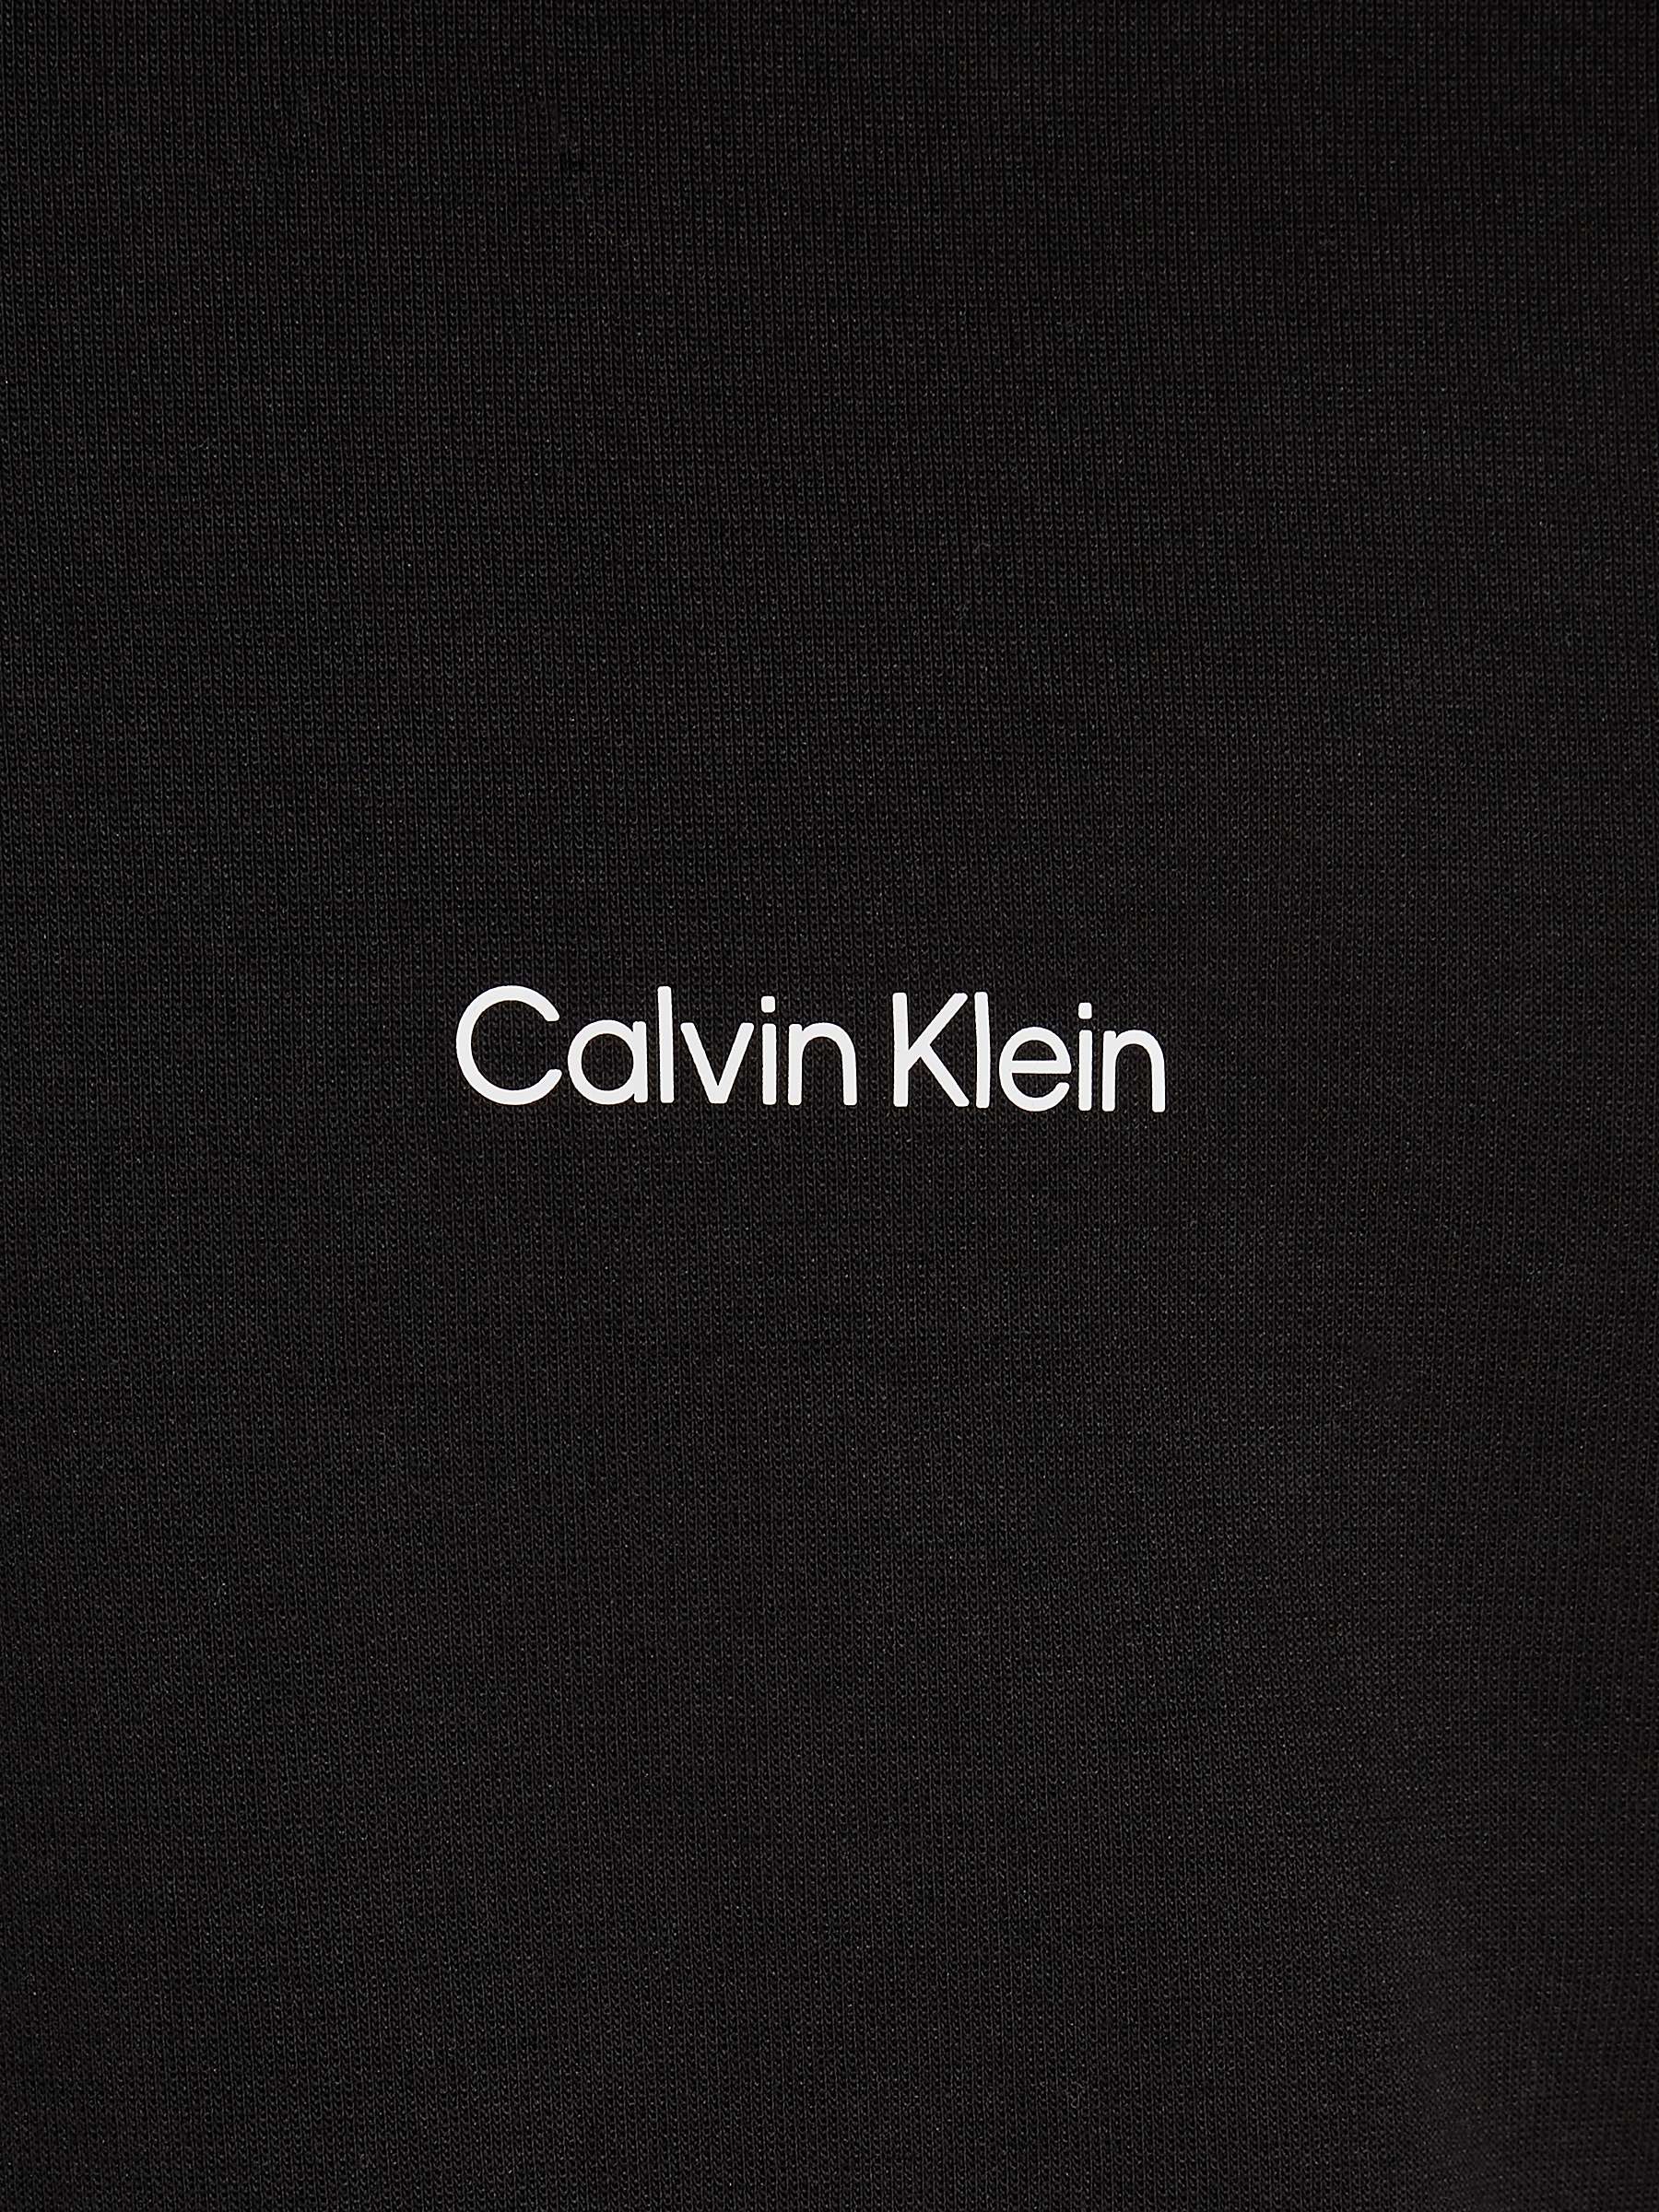 Buy Calvin Klein Micro Half Zip Jumper, Black Online at johnlewis.com